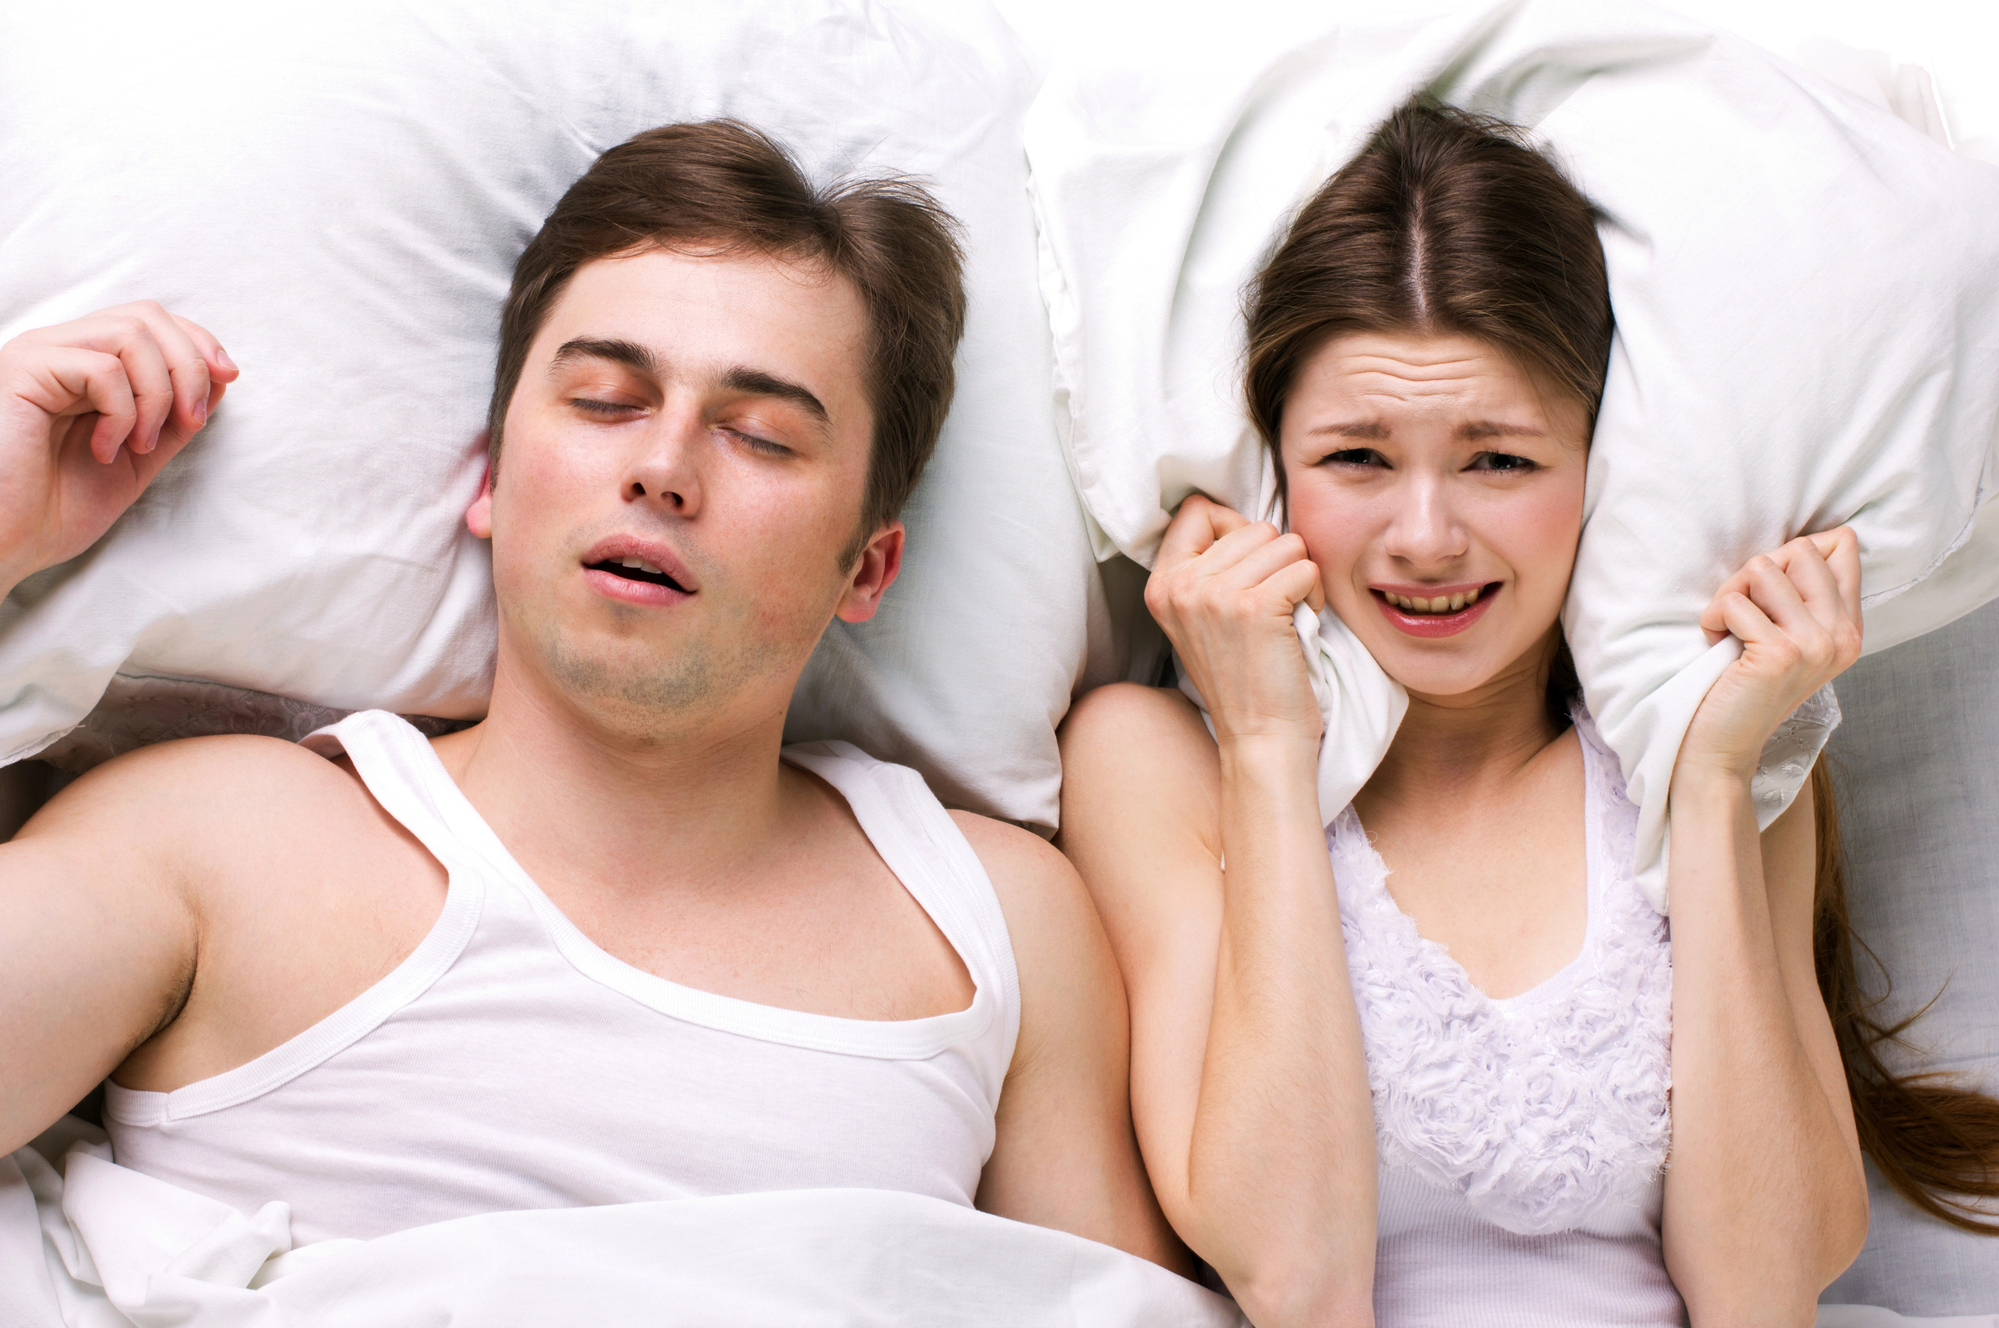 Anti-snoring devices